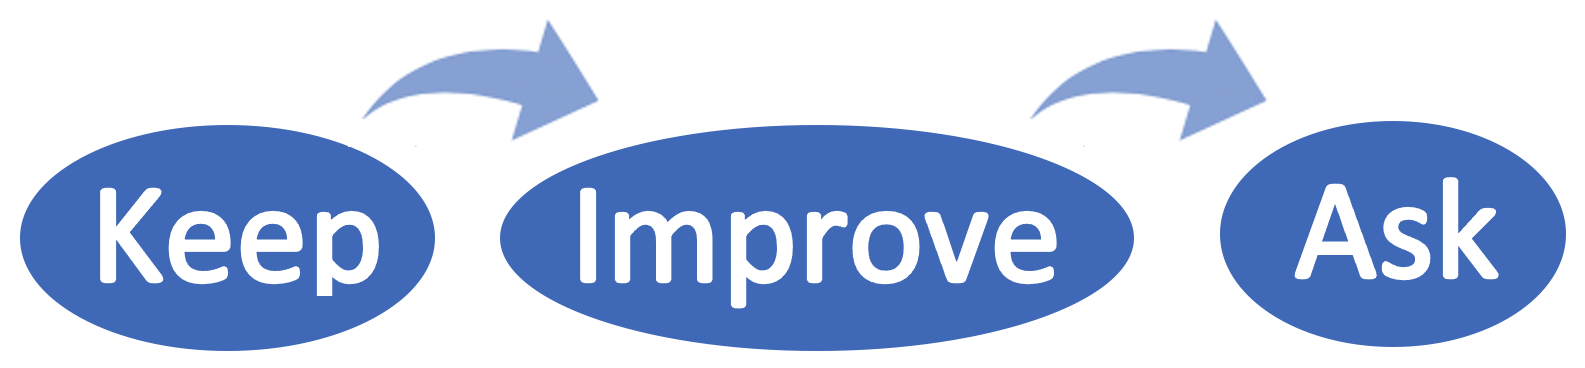 Keep-improve-ask feedback model